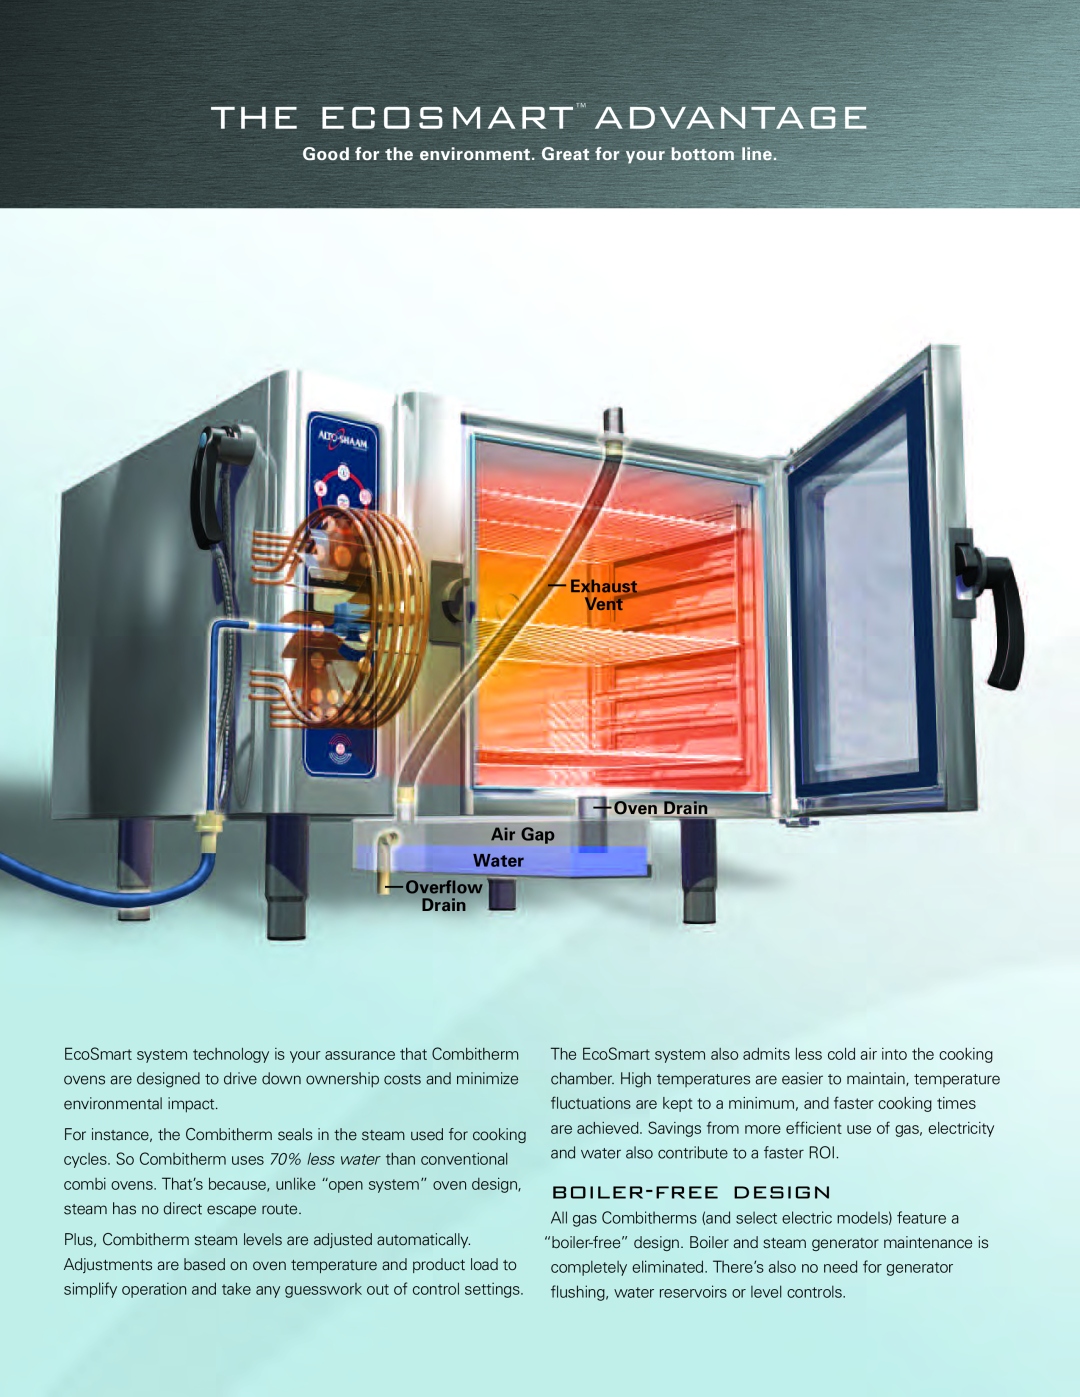 Alto-Shaam Combi Oven manual The Ecosmart Advantage, boiler-freedesign, Exhaust Vent Oven Drain Air Gap Water Overflow 